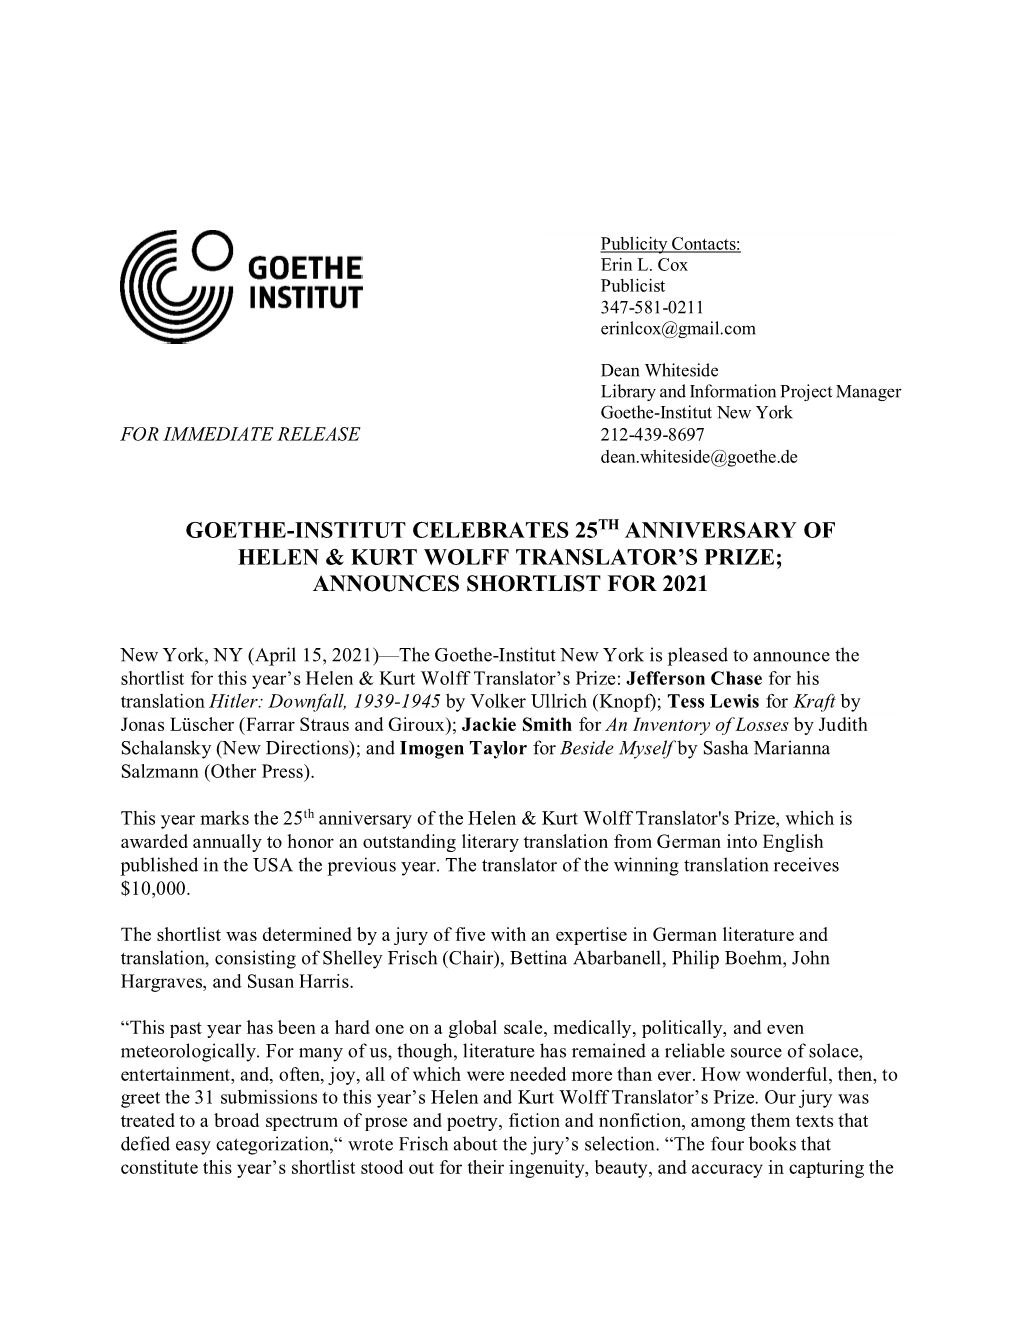 Goethe-Institut Celebrates 25Th Anniversary of Helen & Kurt Wolff Translator's Prize; Announces Shortlist for 2021